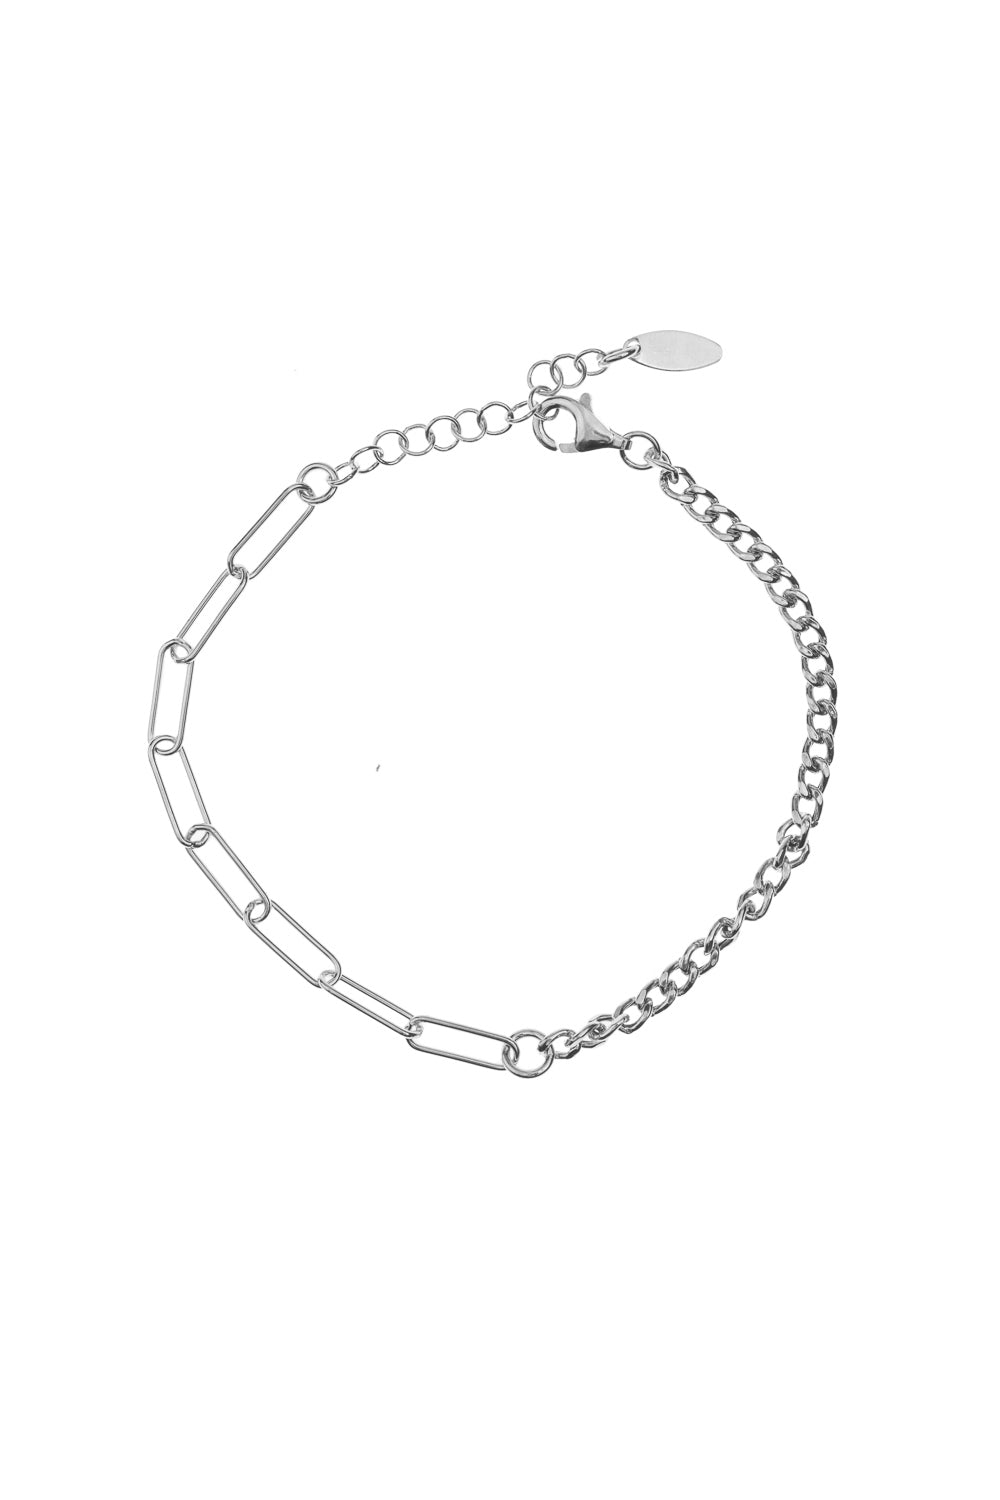 Silver bracelet square classic chain